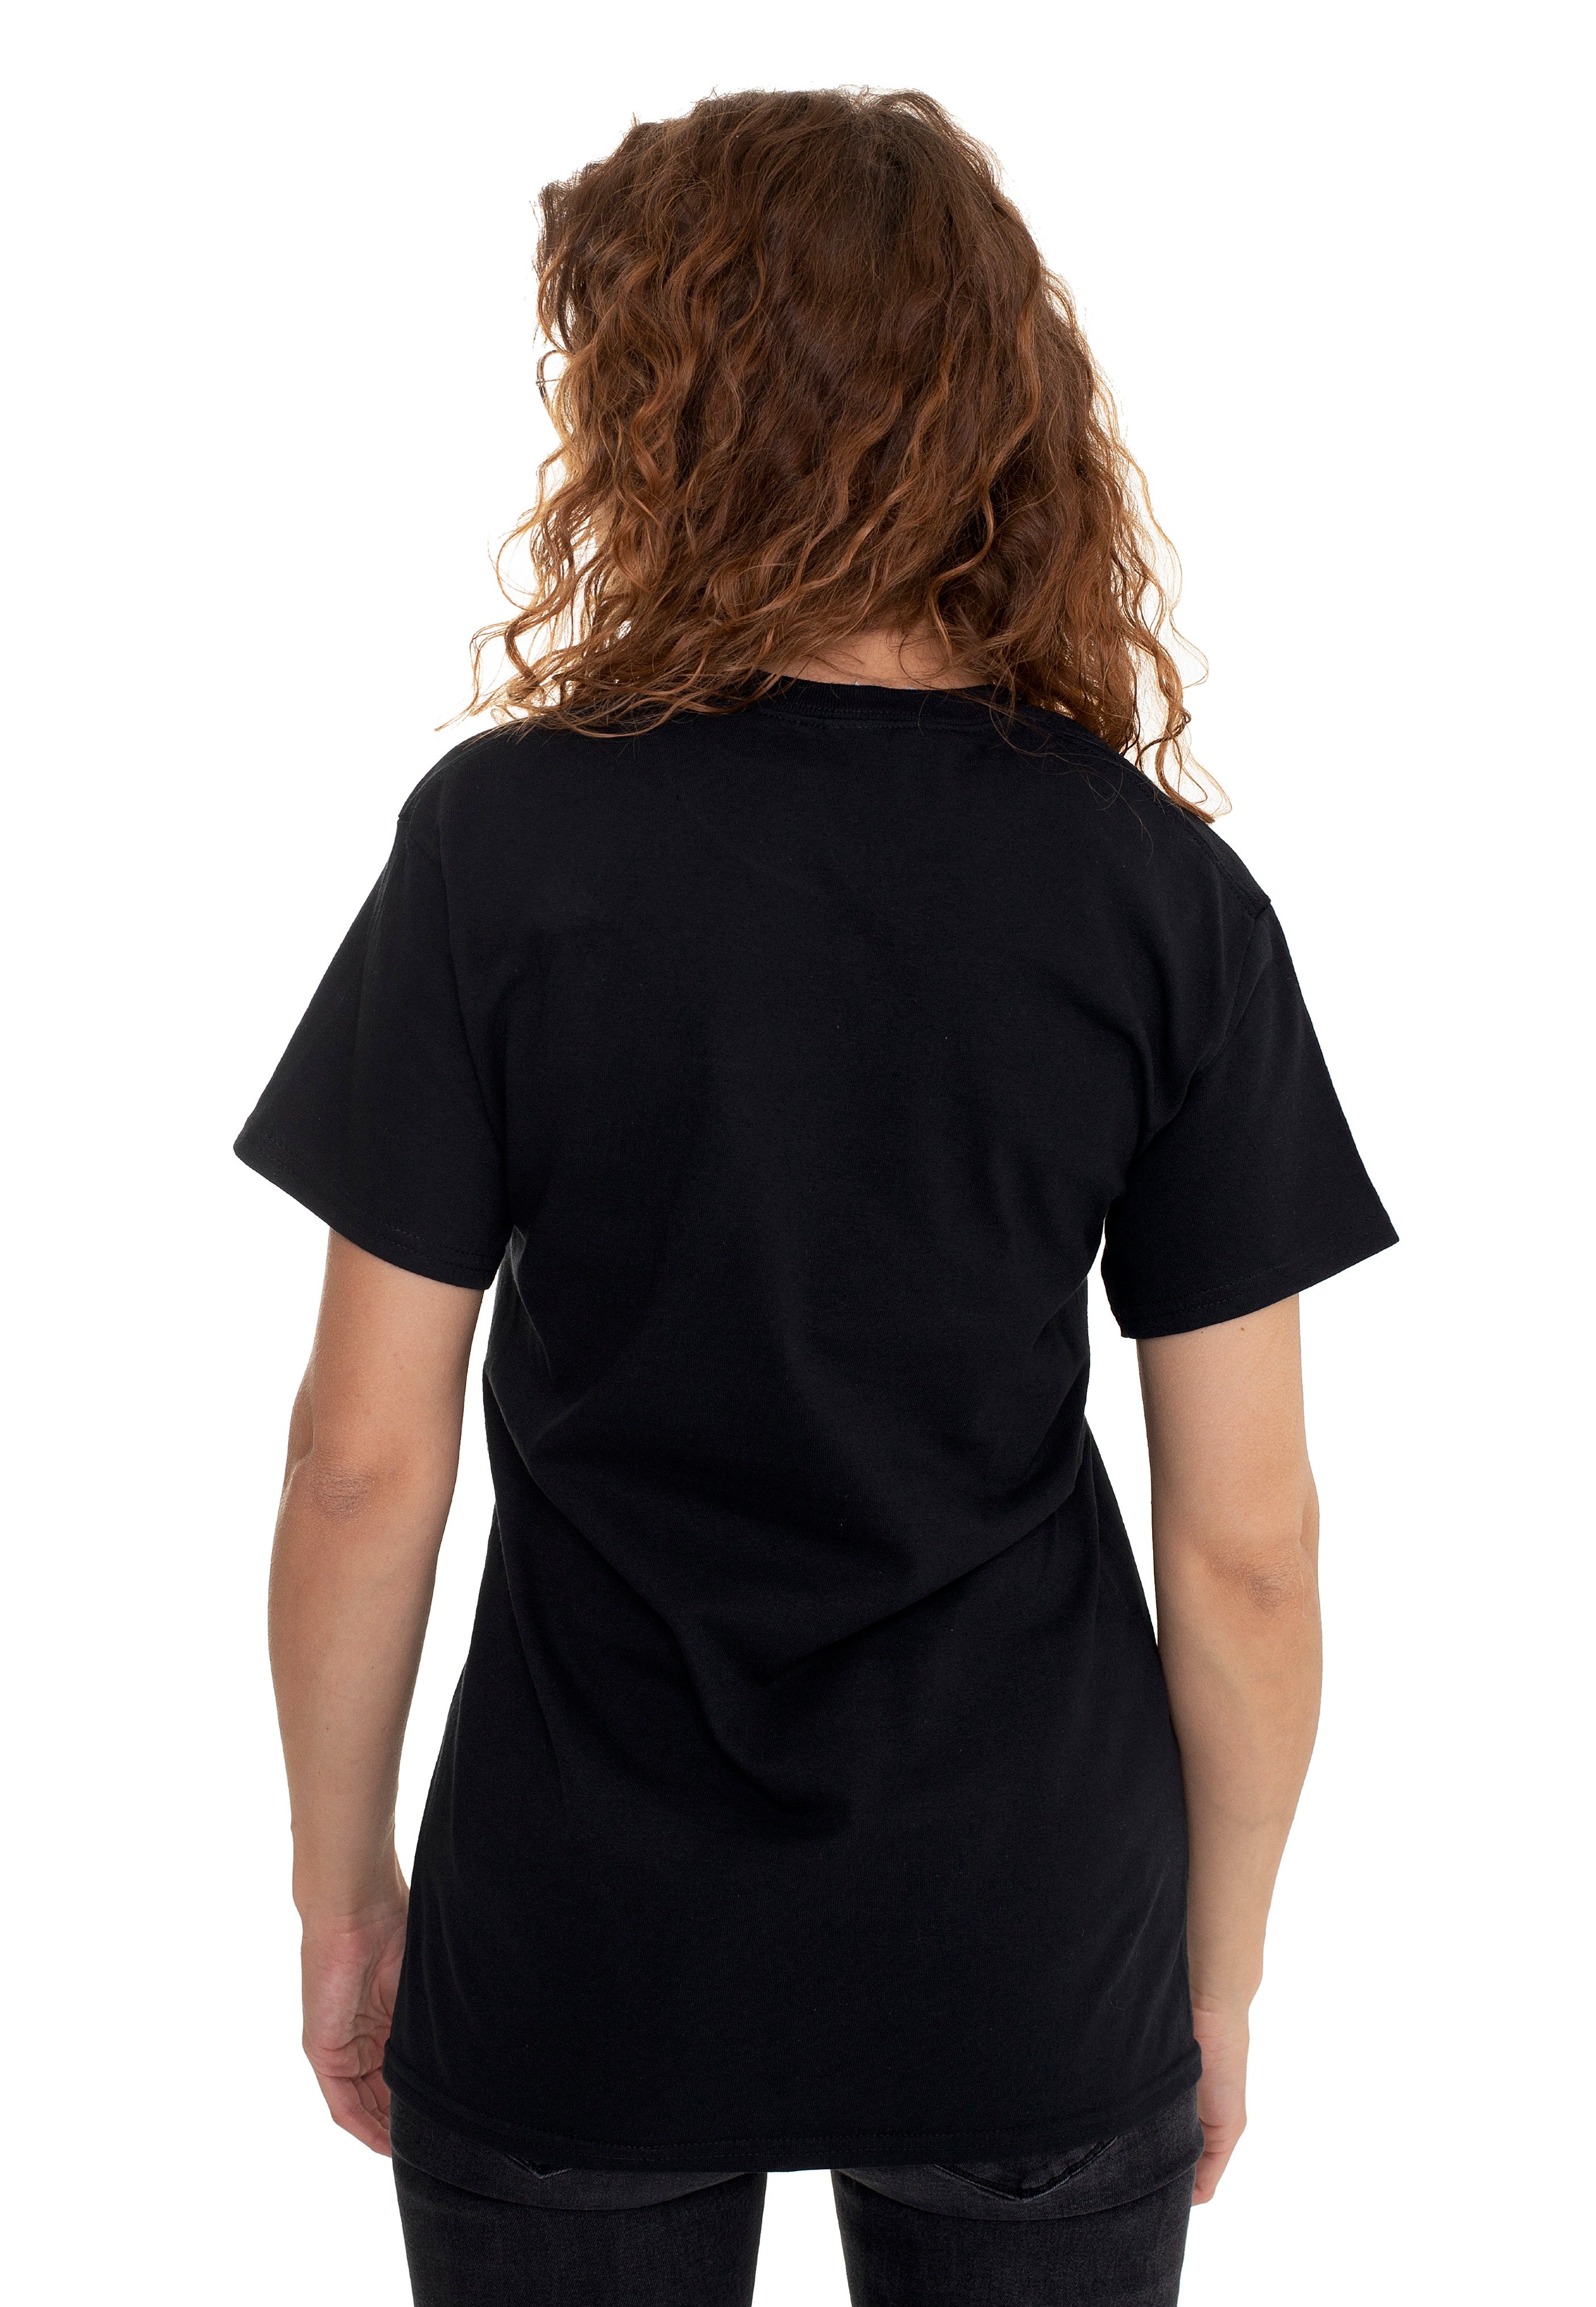 Tetrarch - Lost Myself - T-Shirt | Women-Image